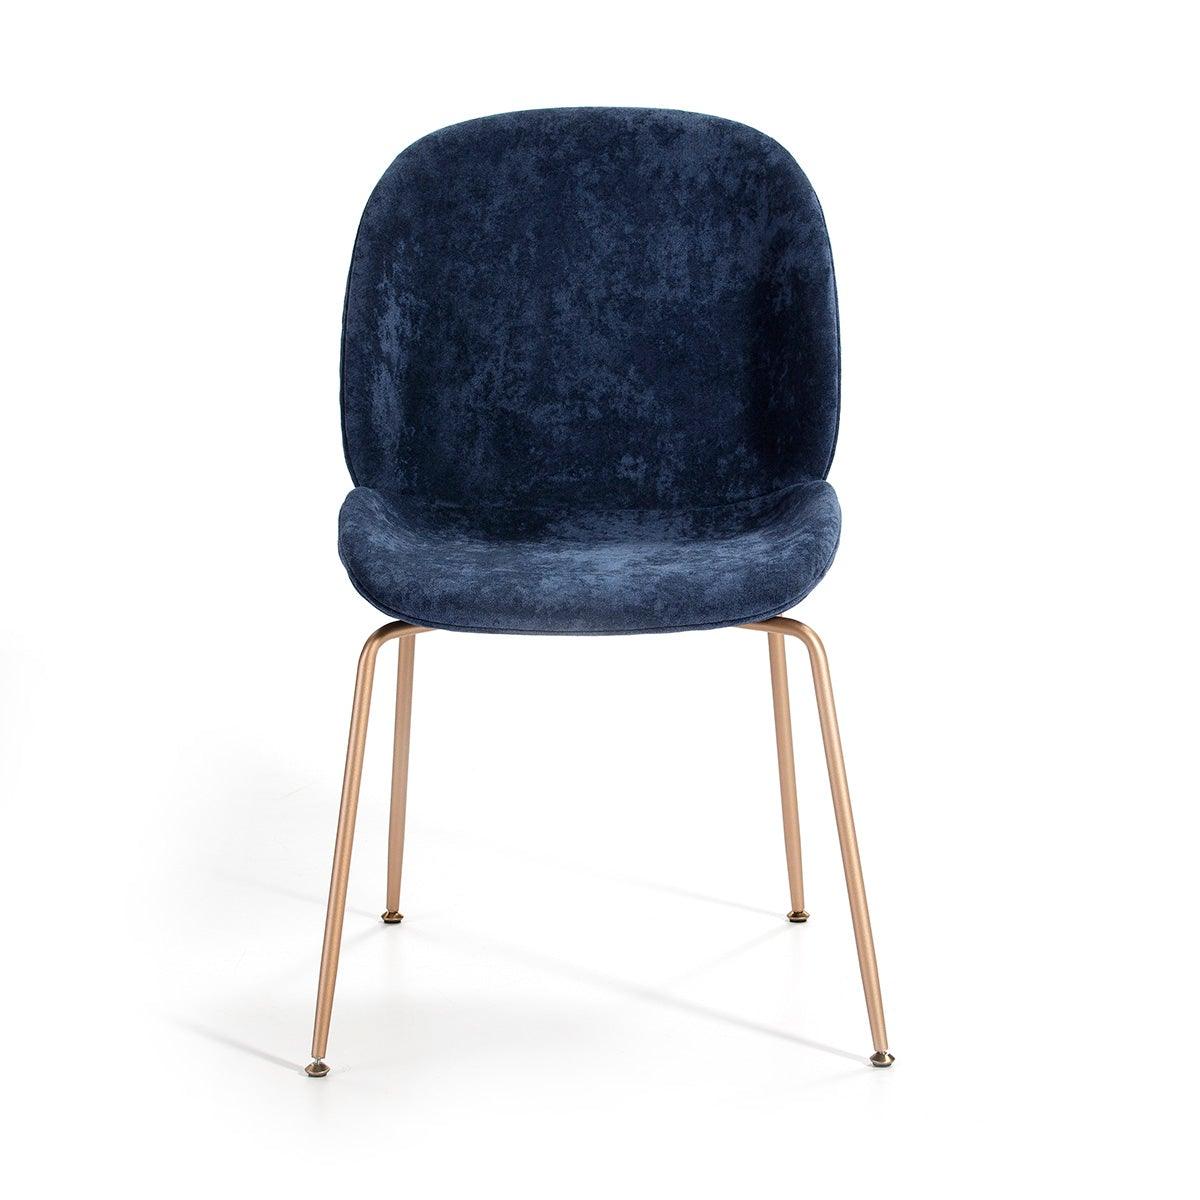 Fabric Chair W/Gold Legs